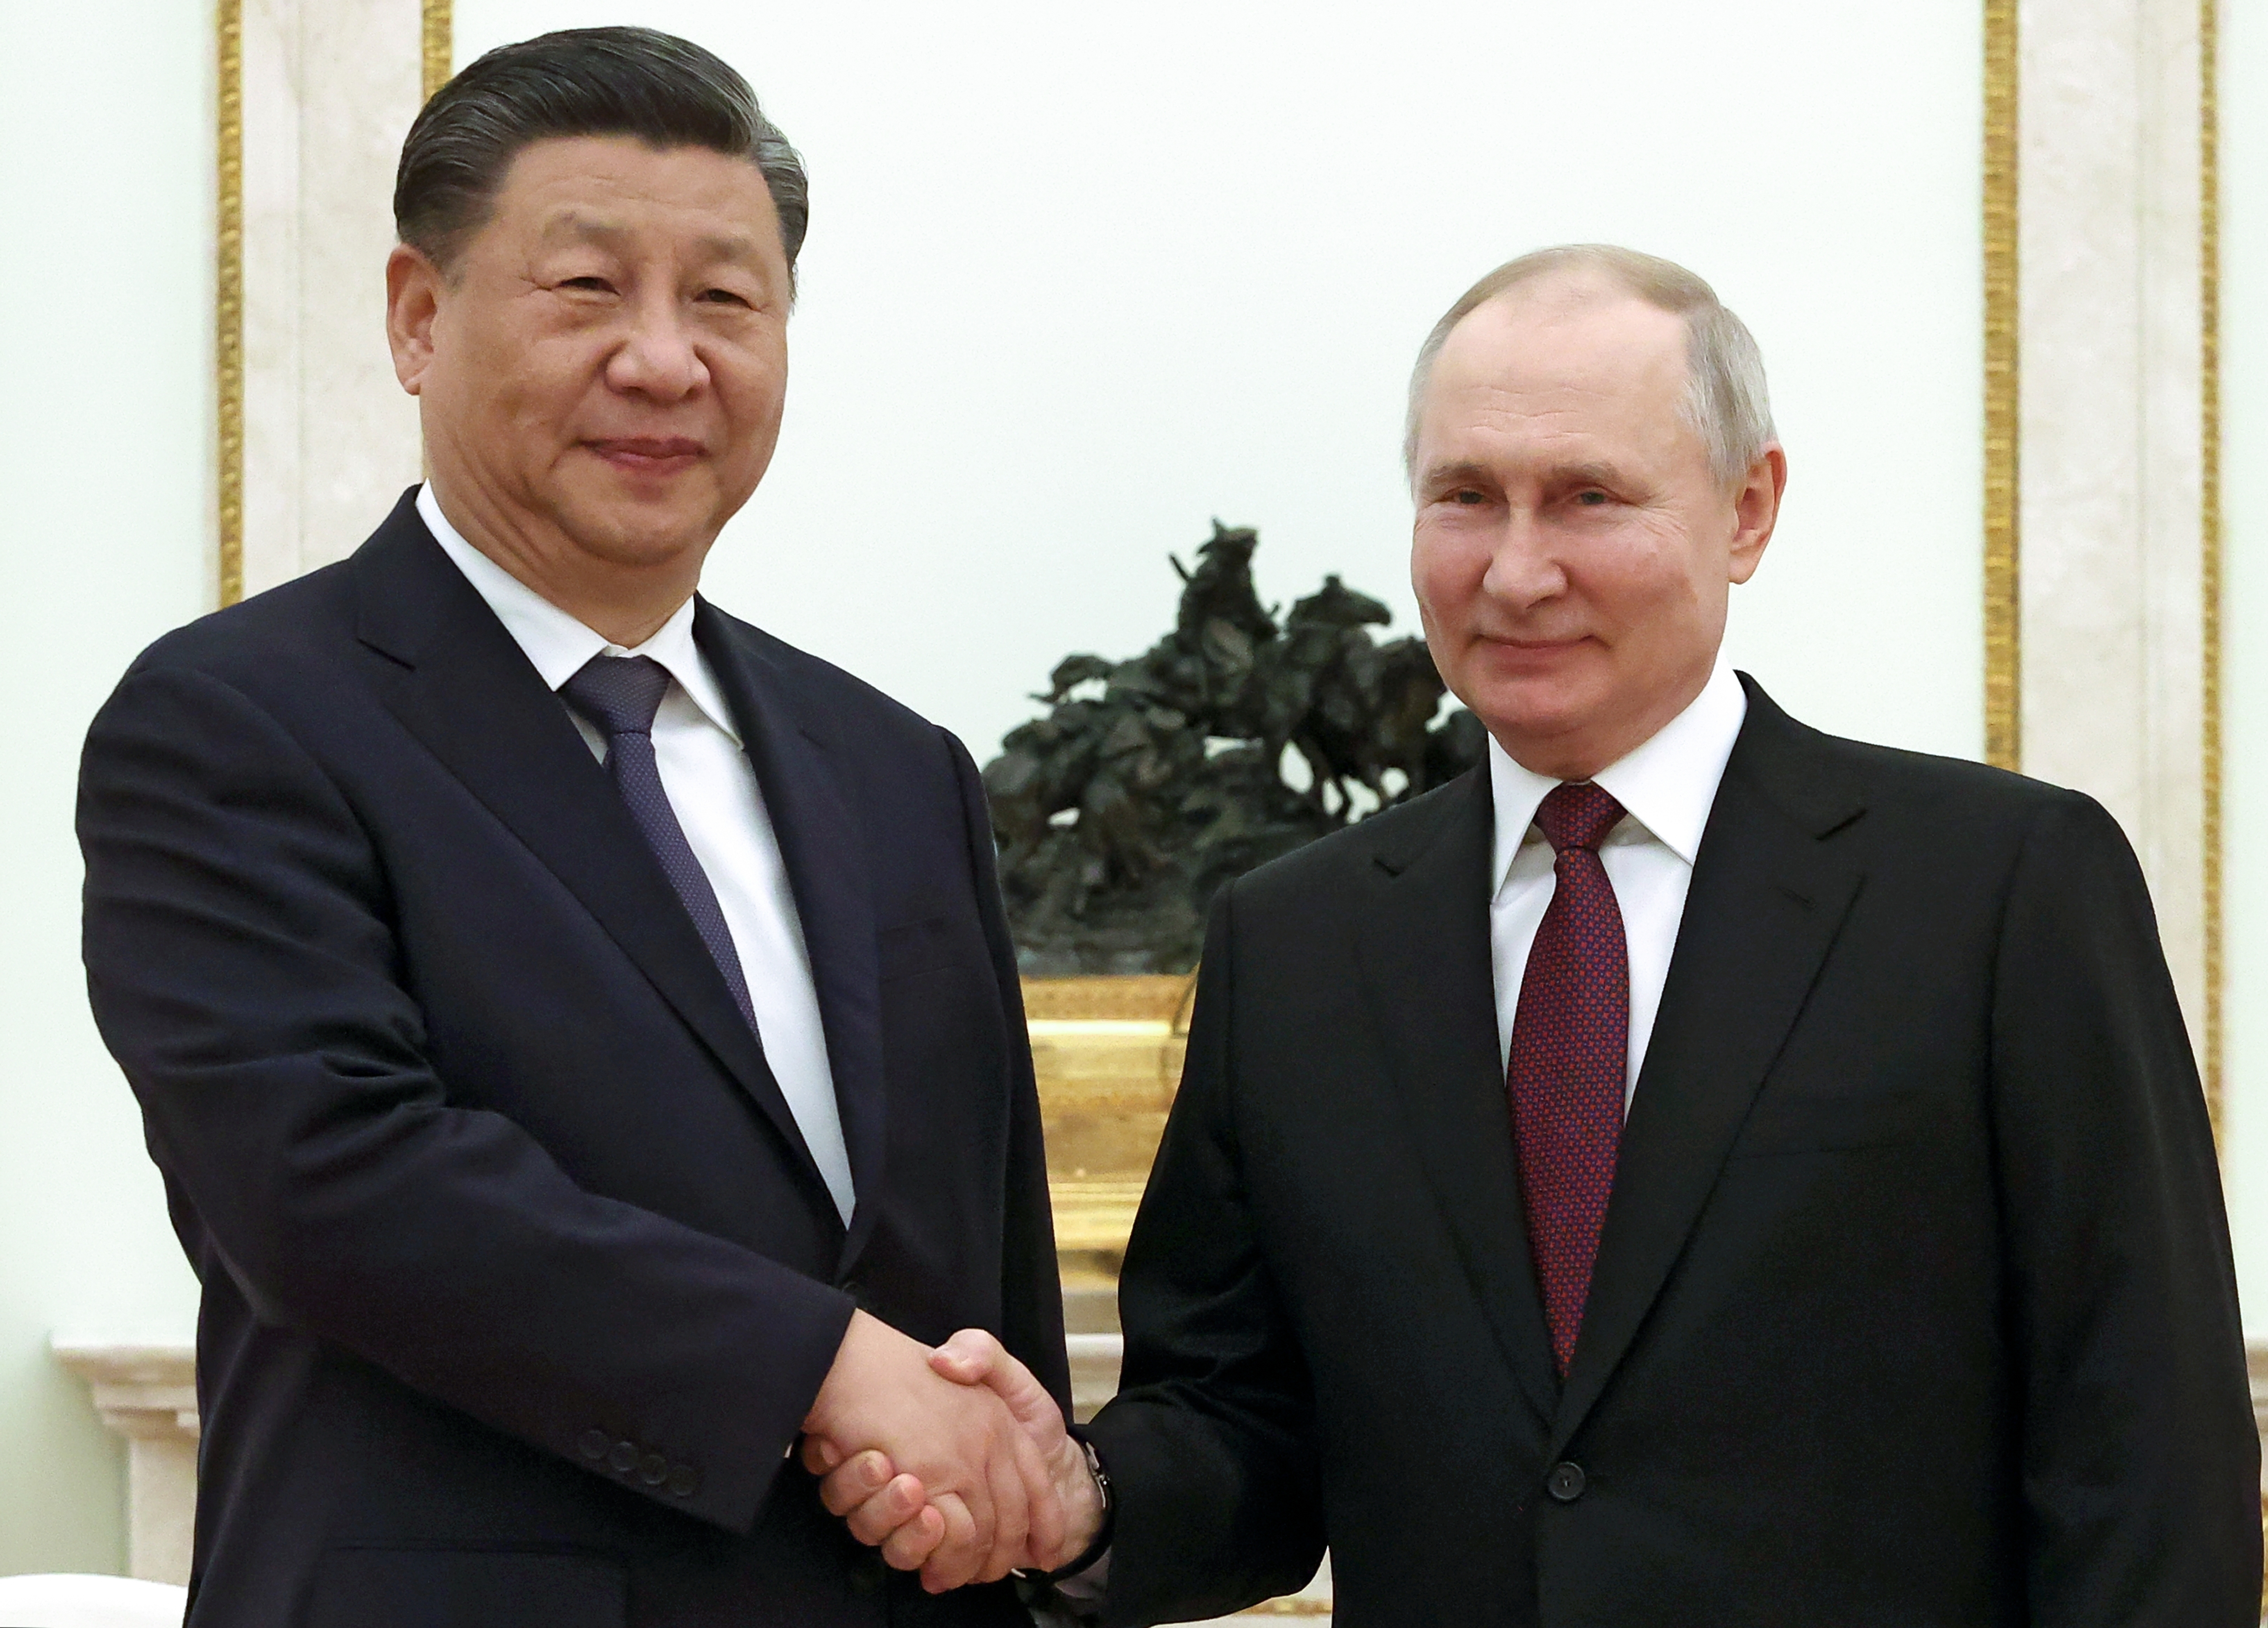 El presidente chino Xi Jinping y su homólogo ruso Vladimir Putin en el Kremlin (Sergei Karpukhin, Sputnik, Kremlin Pool Photo vía AP)